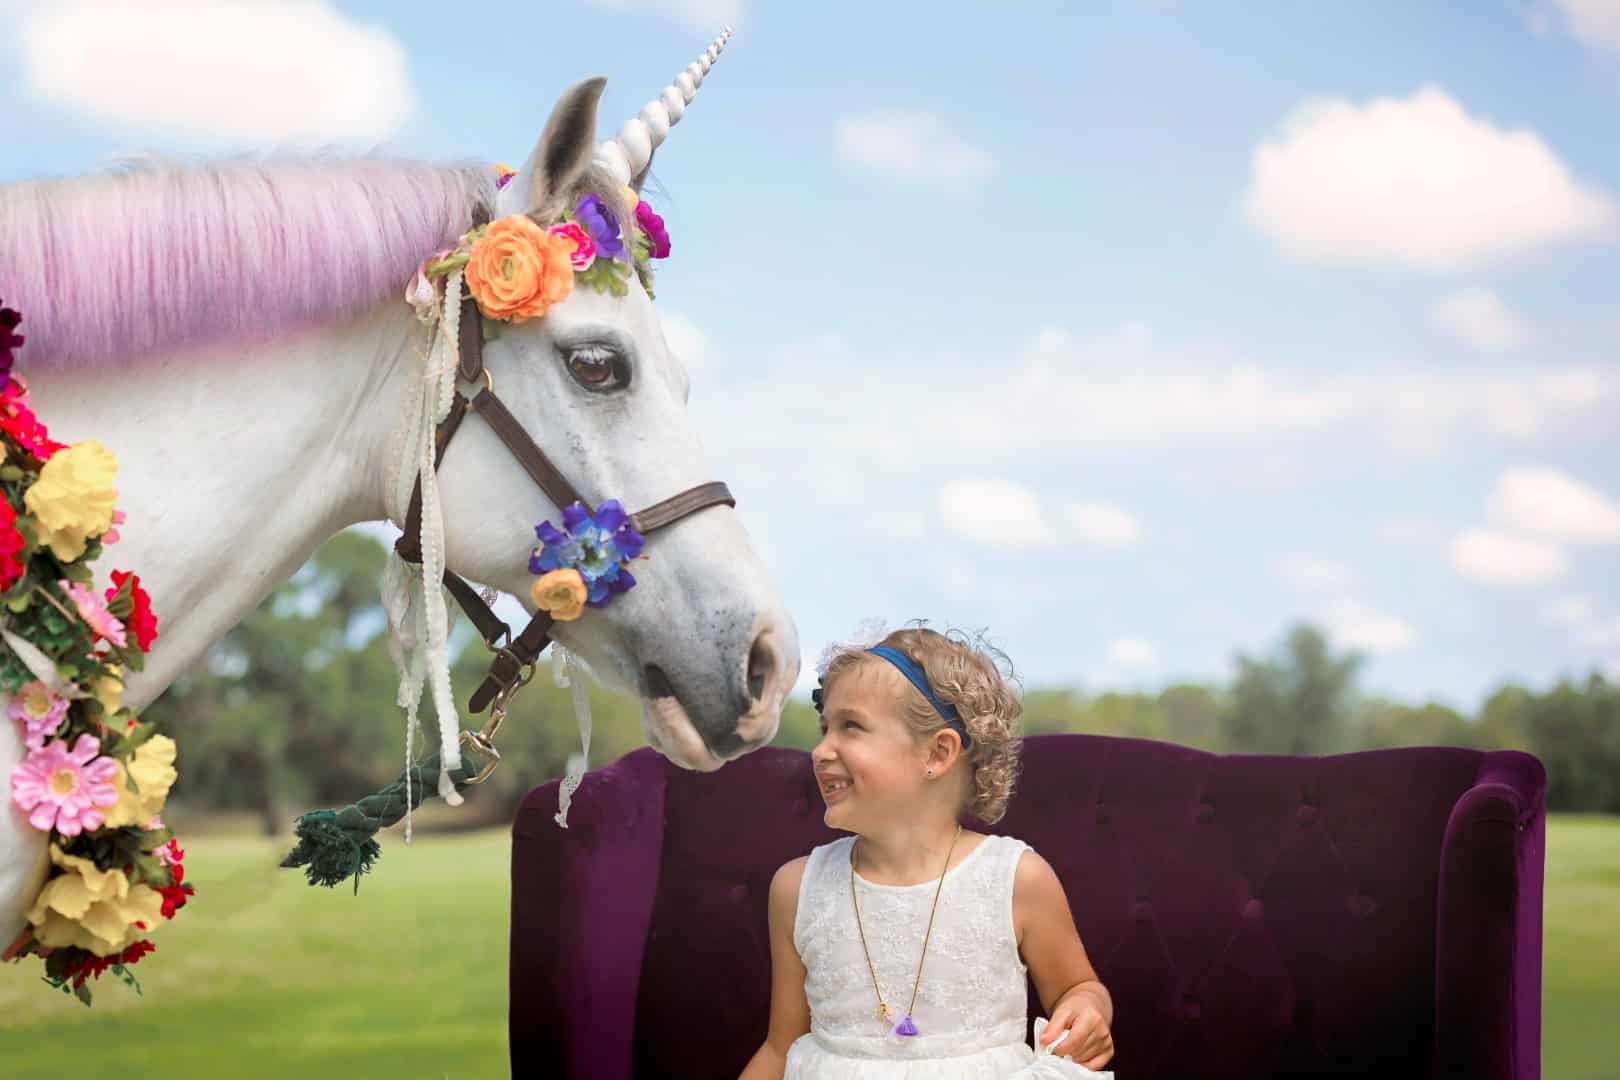 Wish Kid Charlotte got to meet a unicorn!